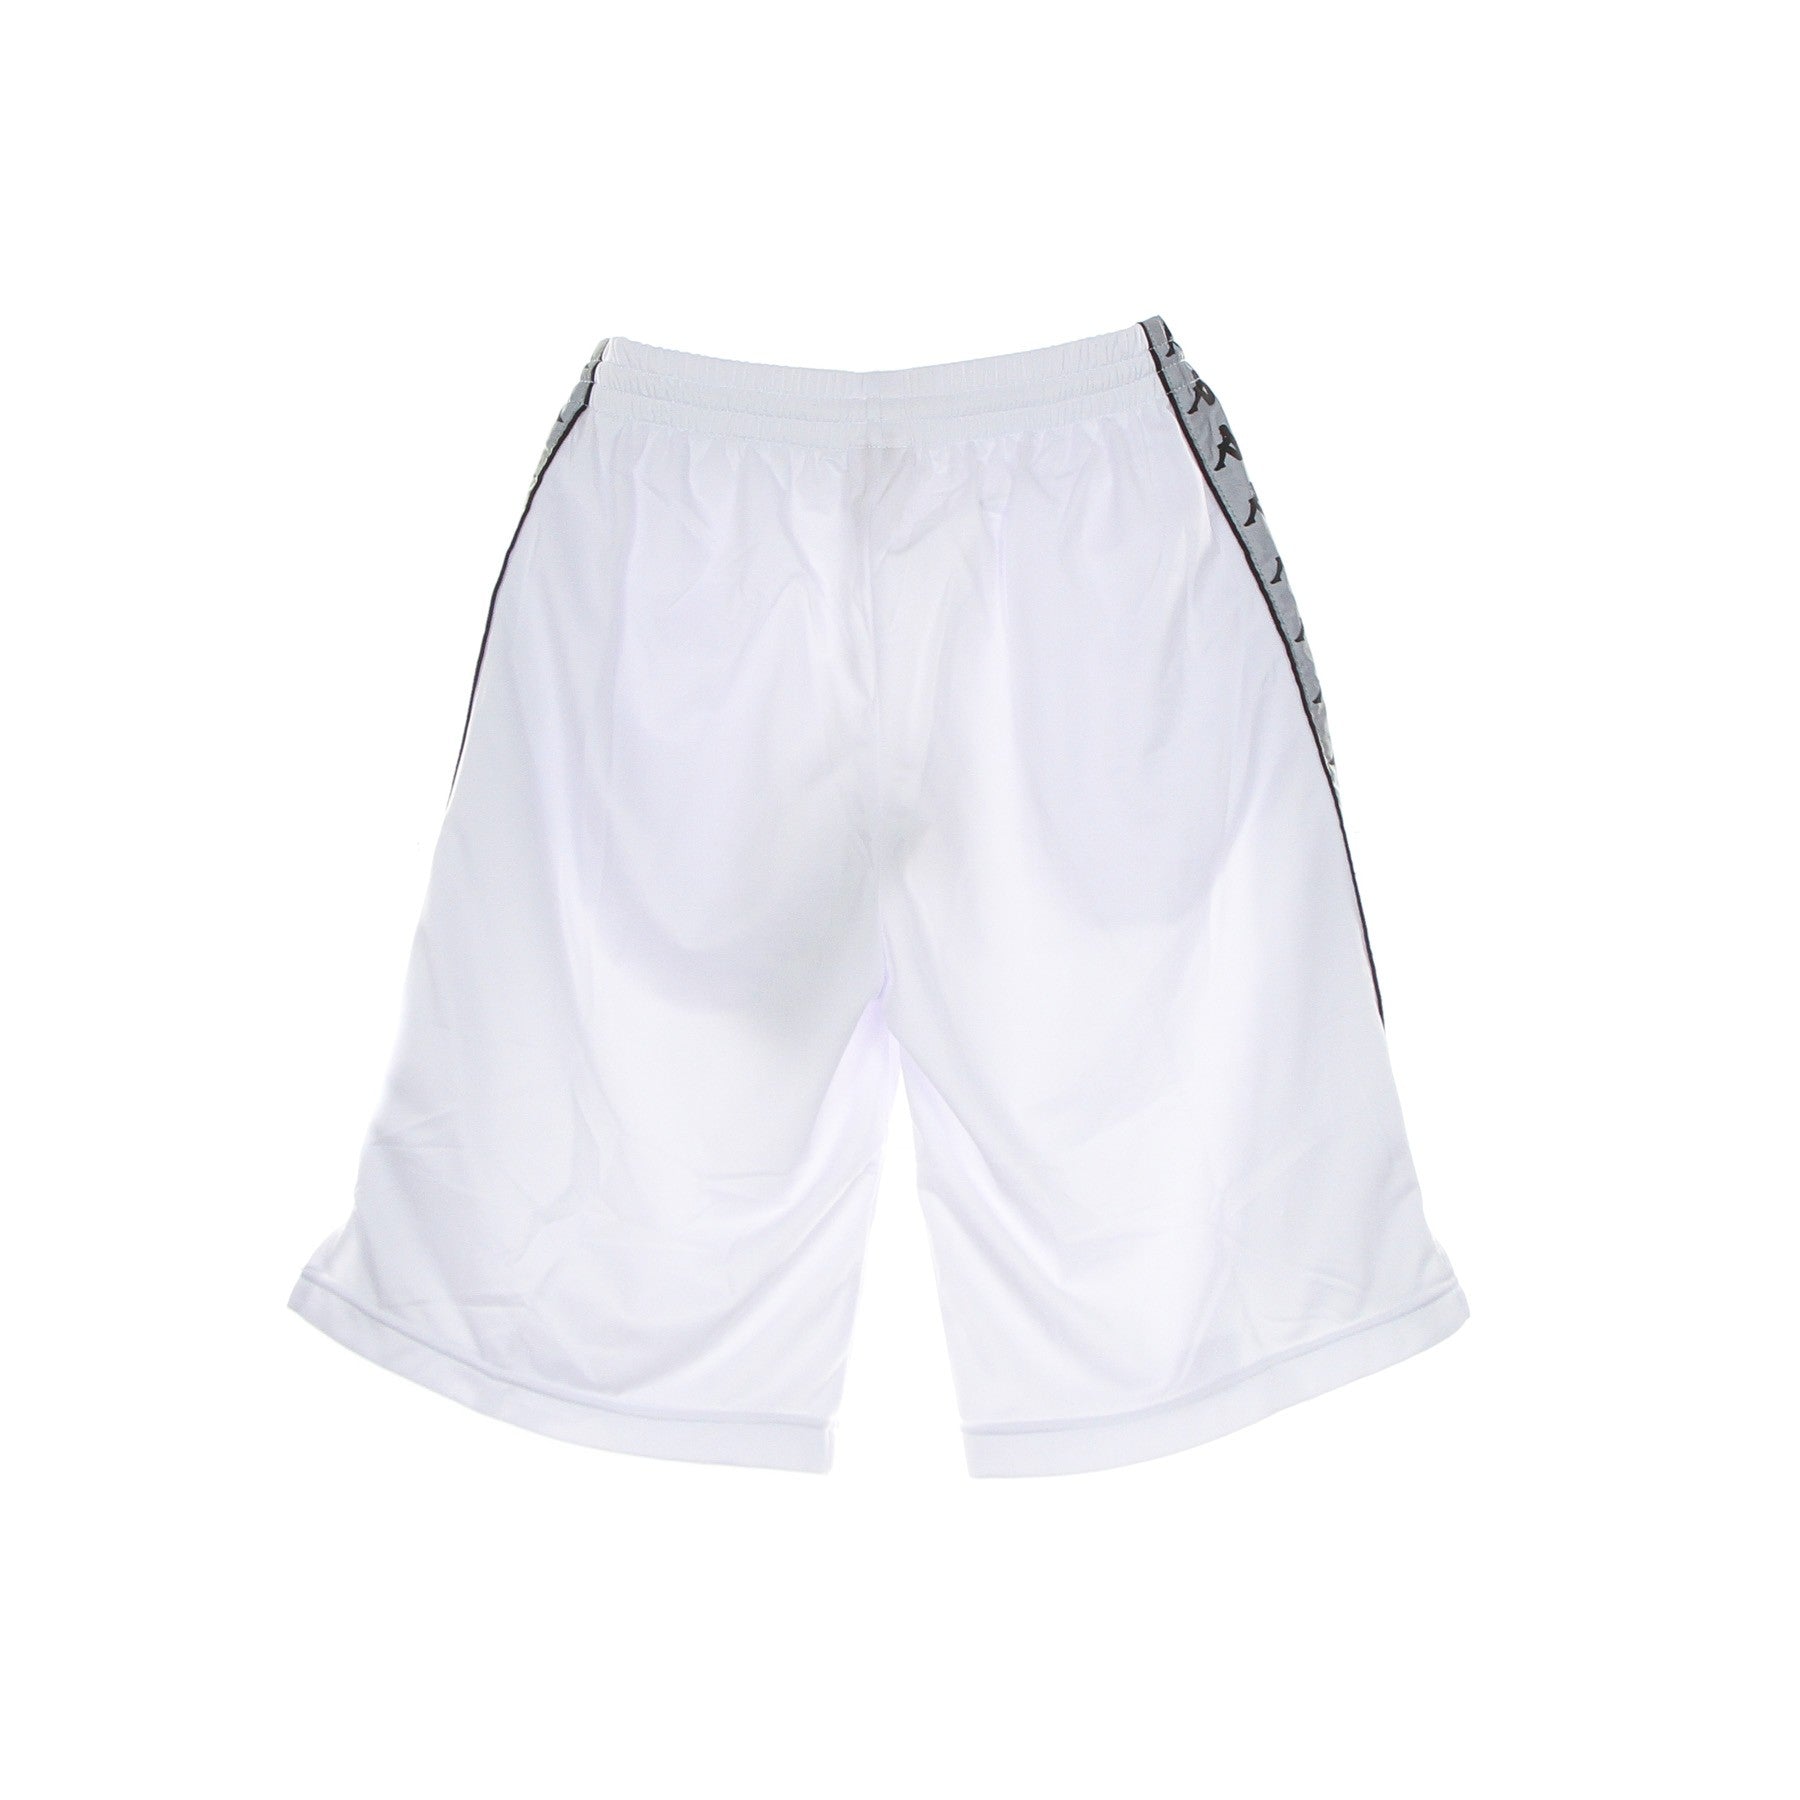 Men's Shorts Elon White/grey Reflective Band